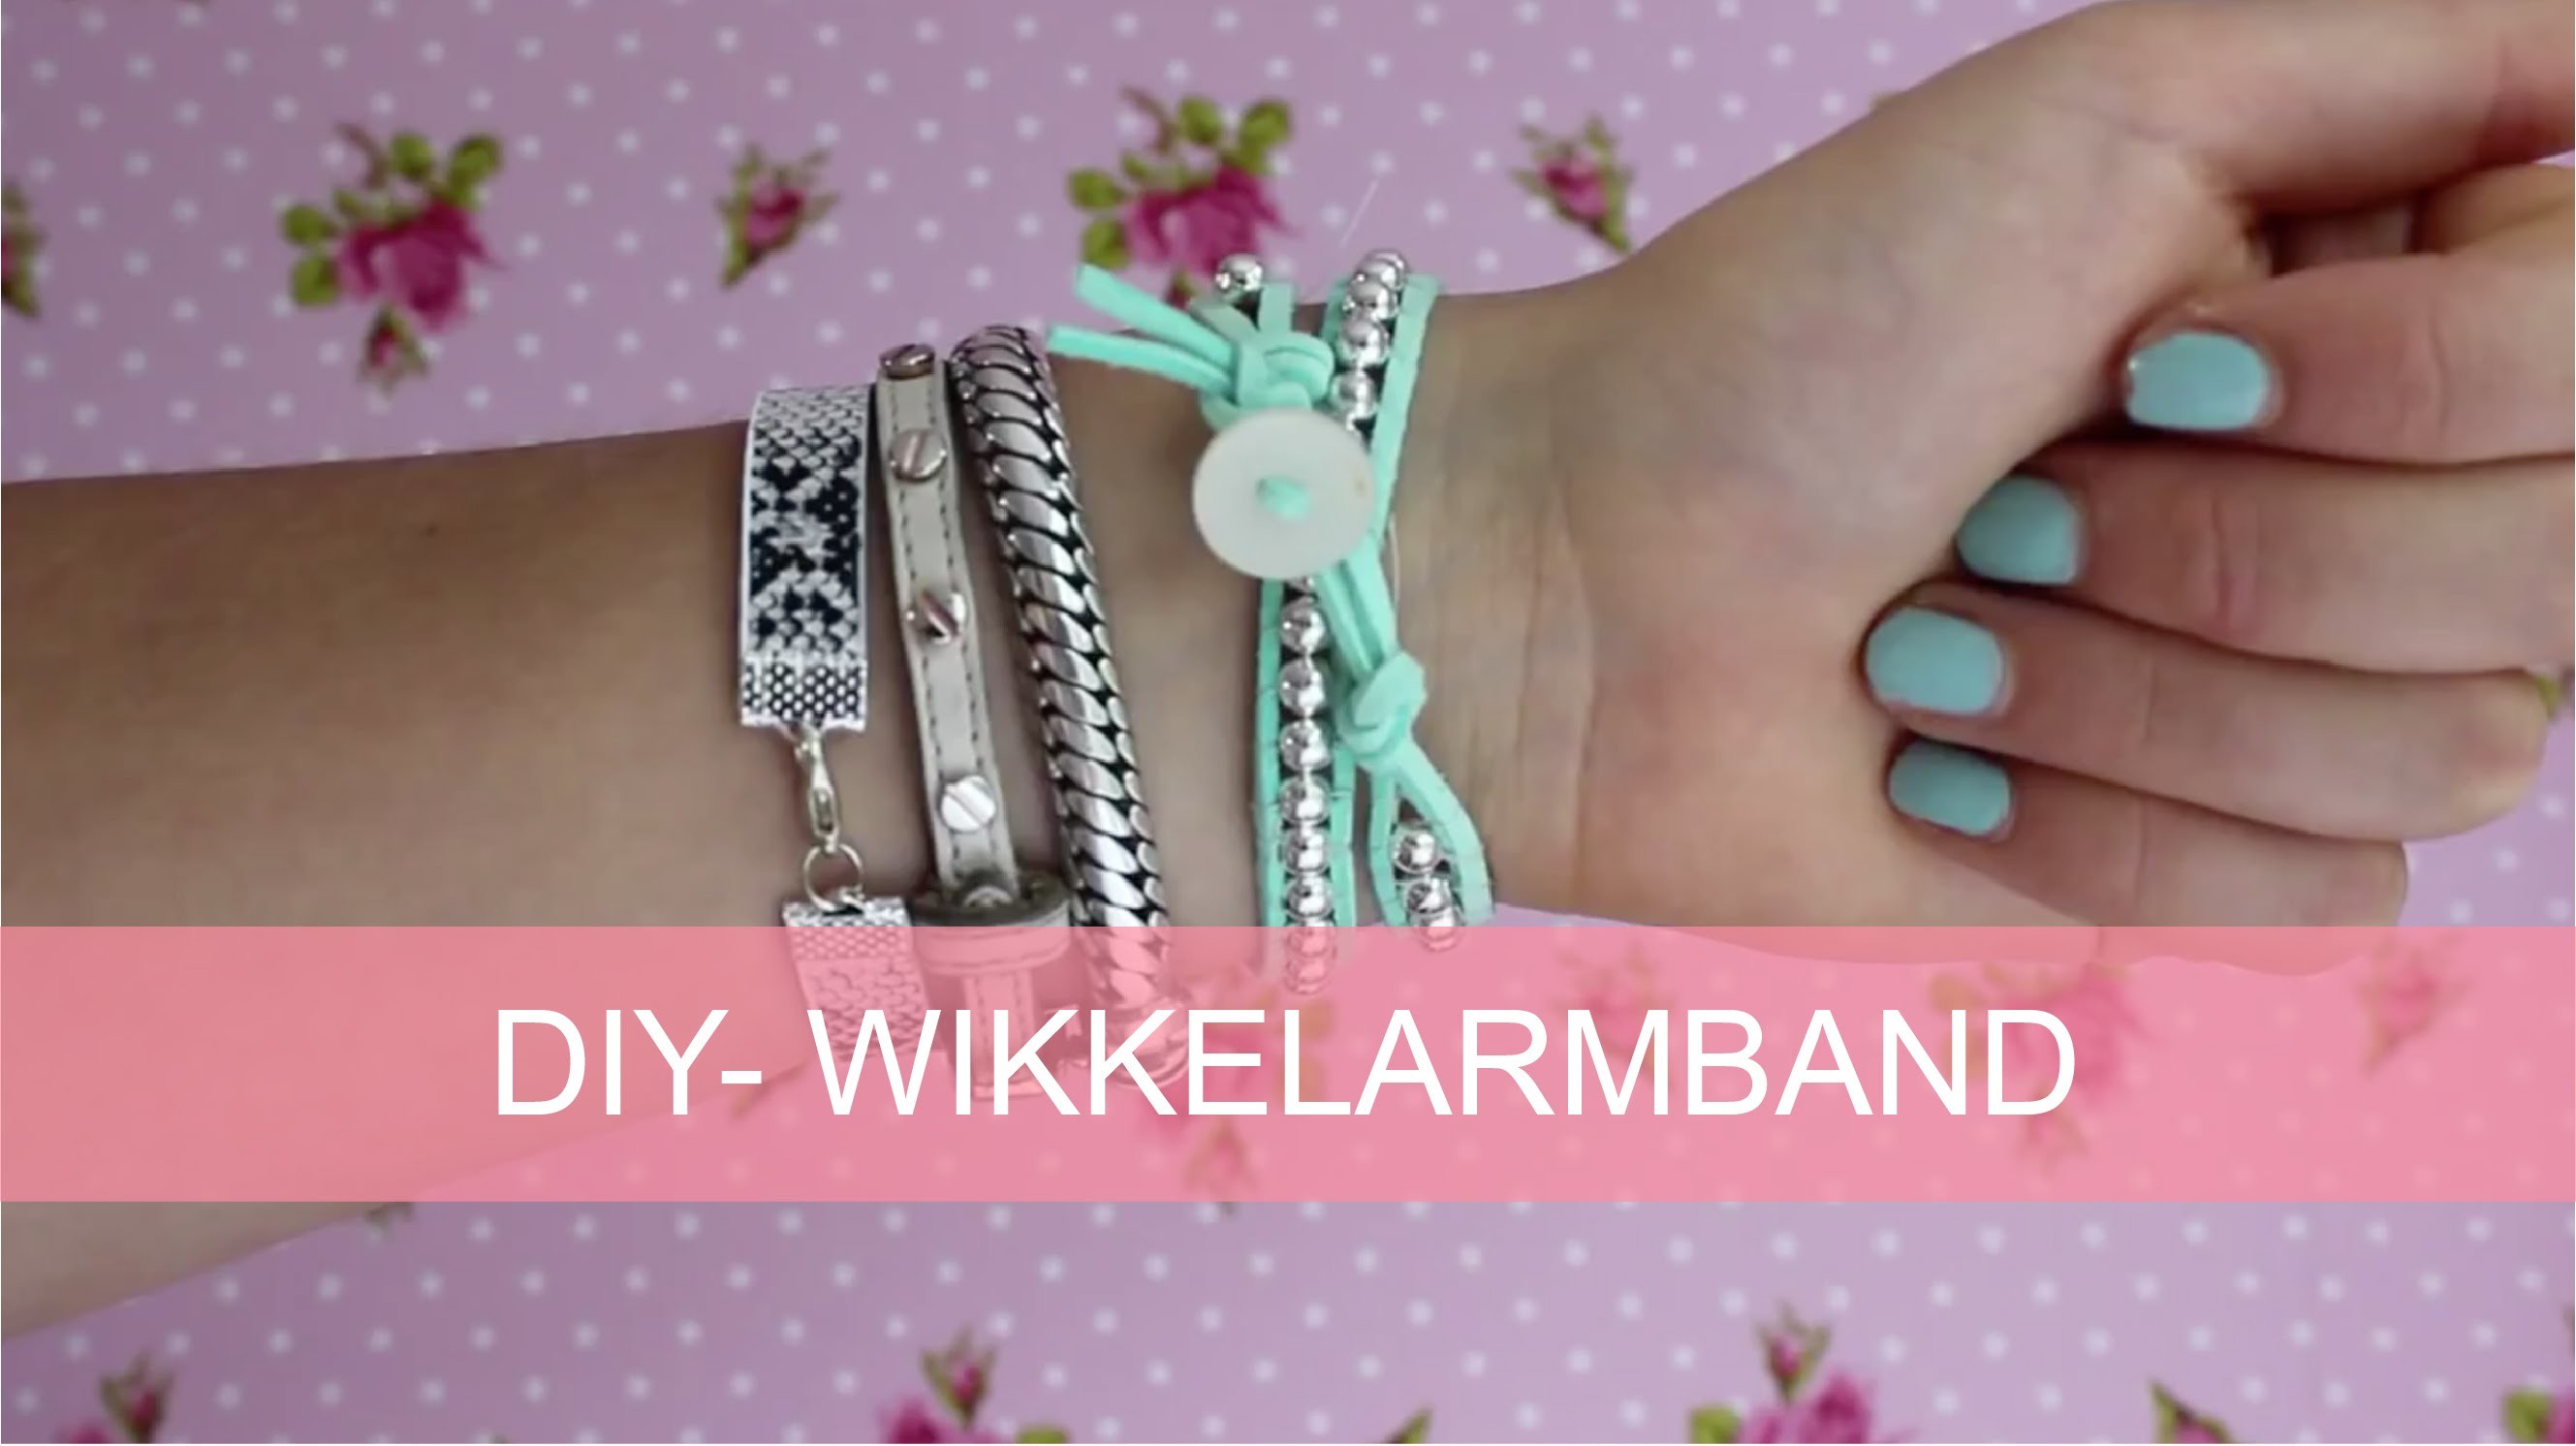 DIY: wikkelarmband | Girlscene